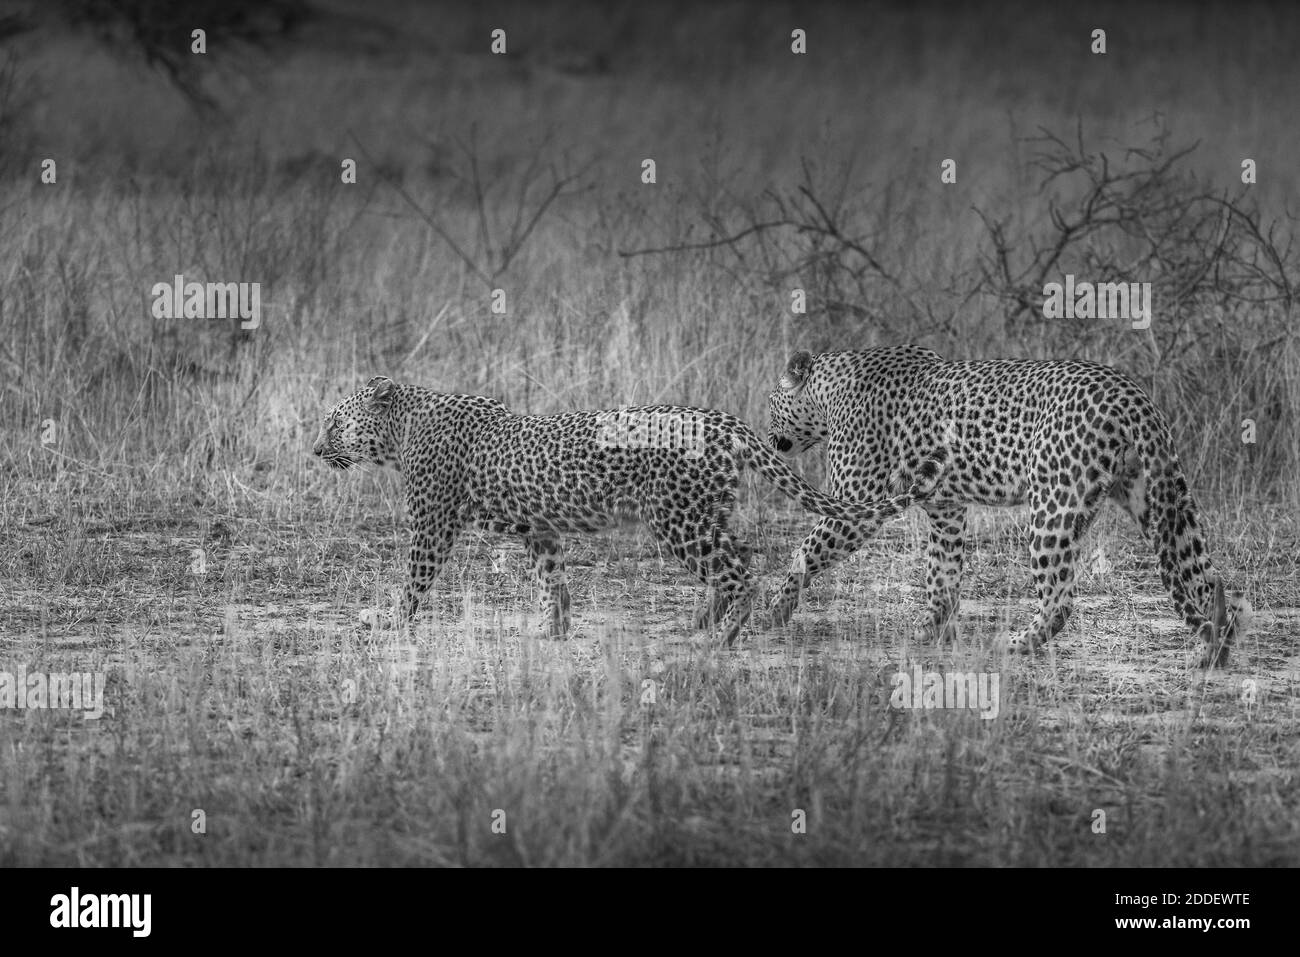 Pair of Leopards walking in savanna grass- Stock Photo